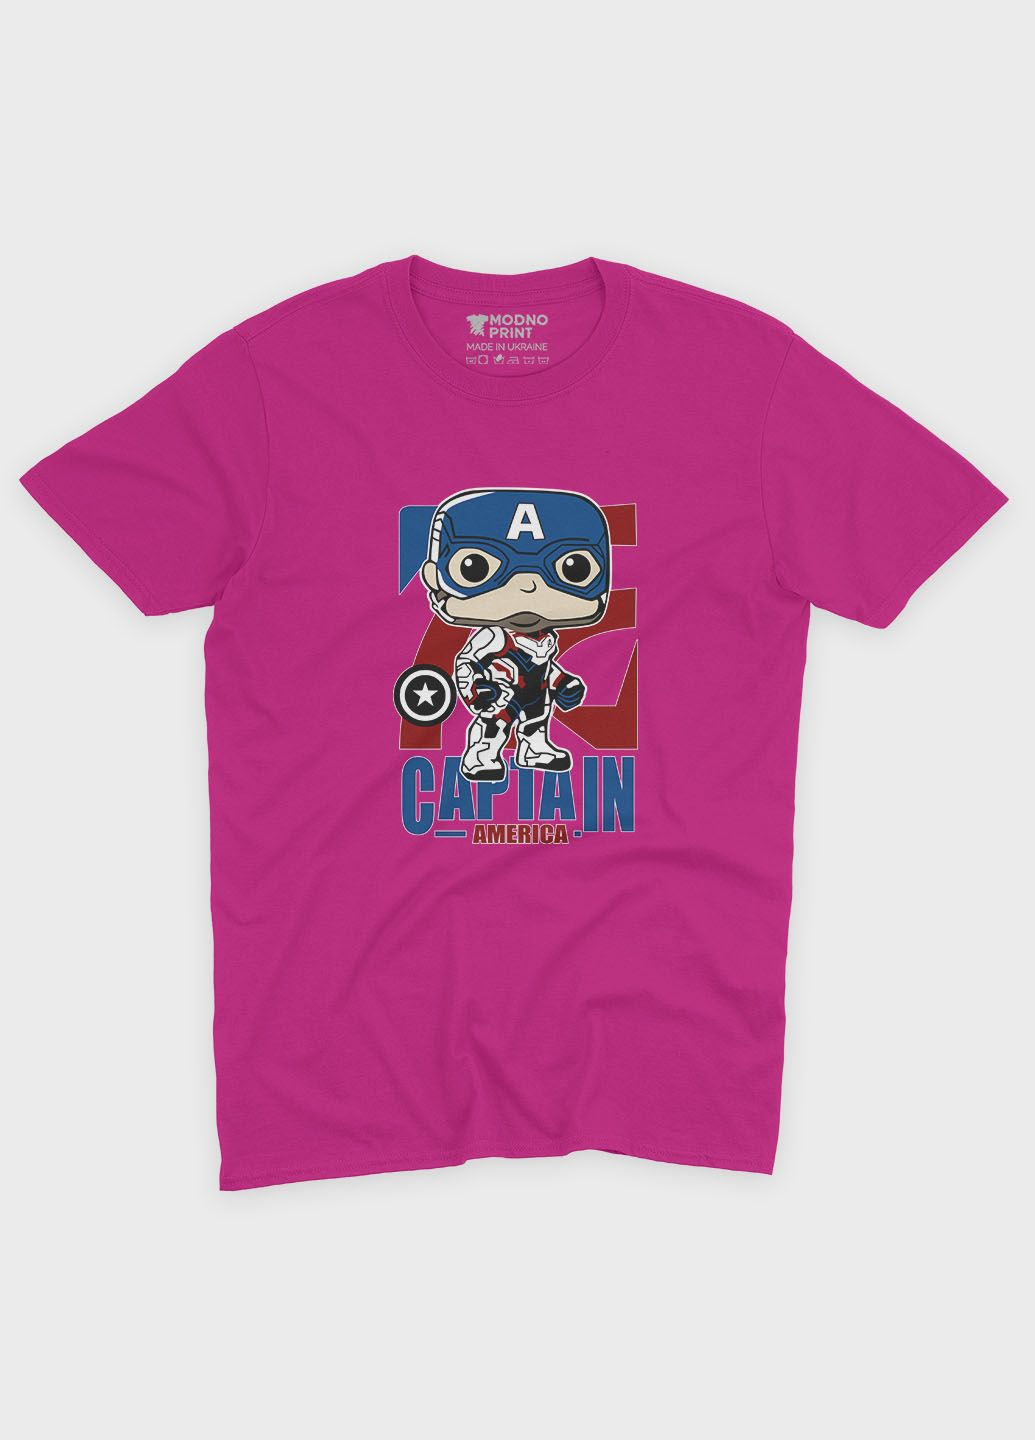 Розовая демисезонная футболка для мальчика с принтом супергероя - капитан америка (ts001-1-fuxj-006-022-007-b) Modno